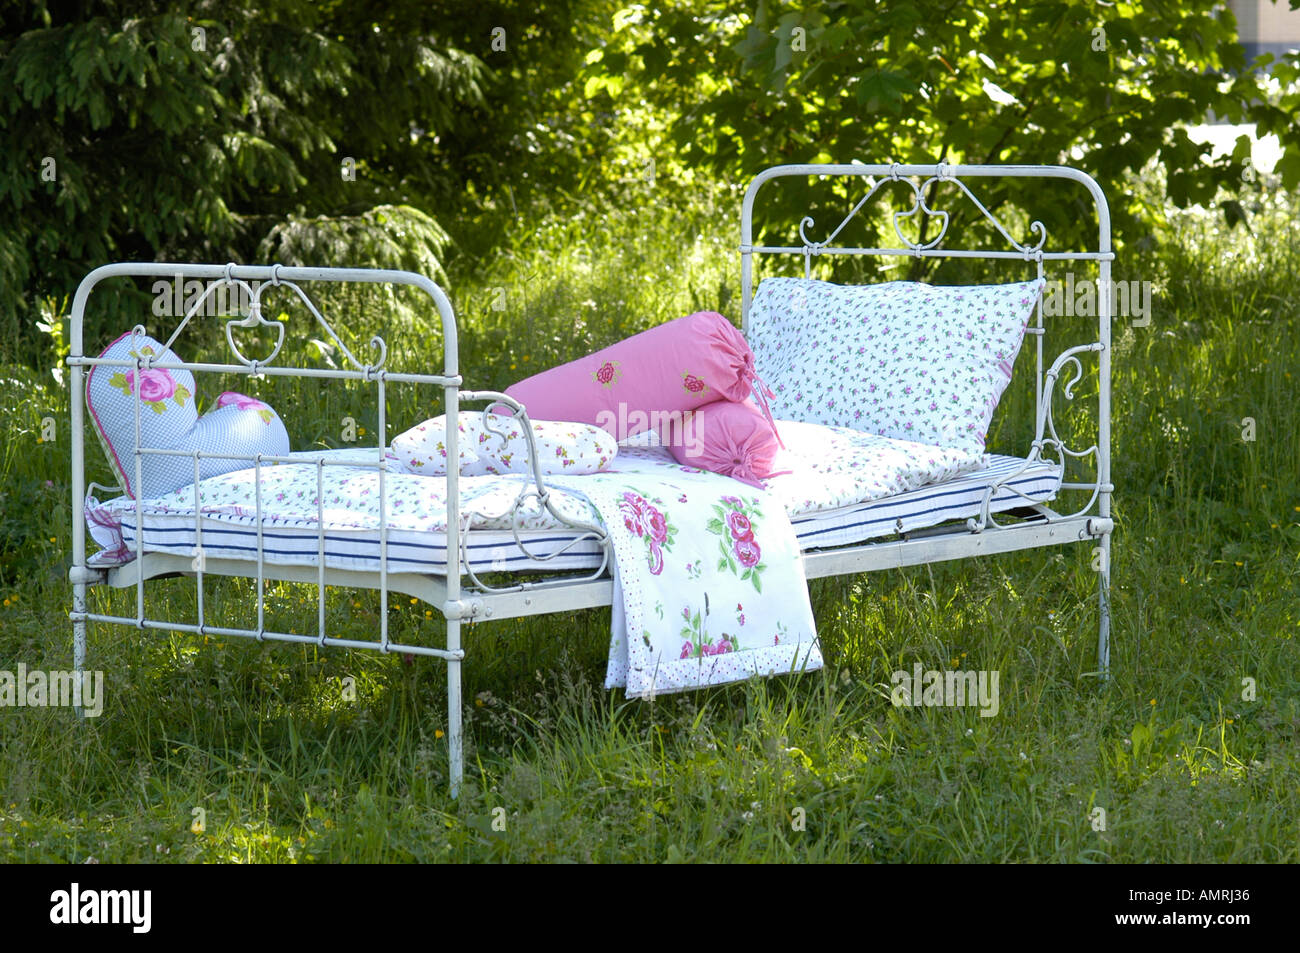 Bett schmiedeisernes Bett im Grünen Ambiente Wohnaccesoires bed in a green meadow Stock Photo